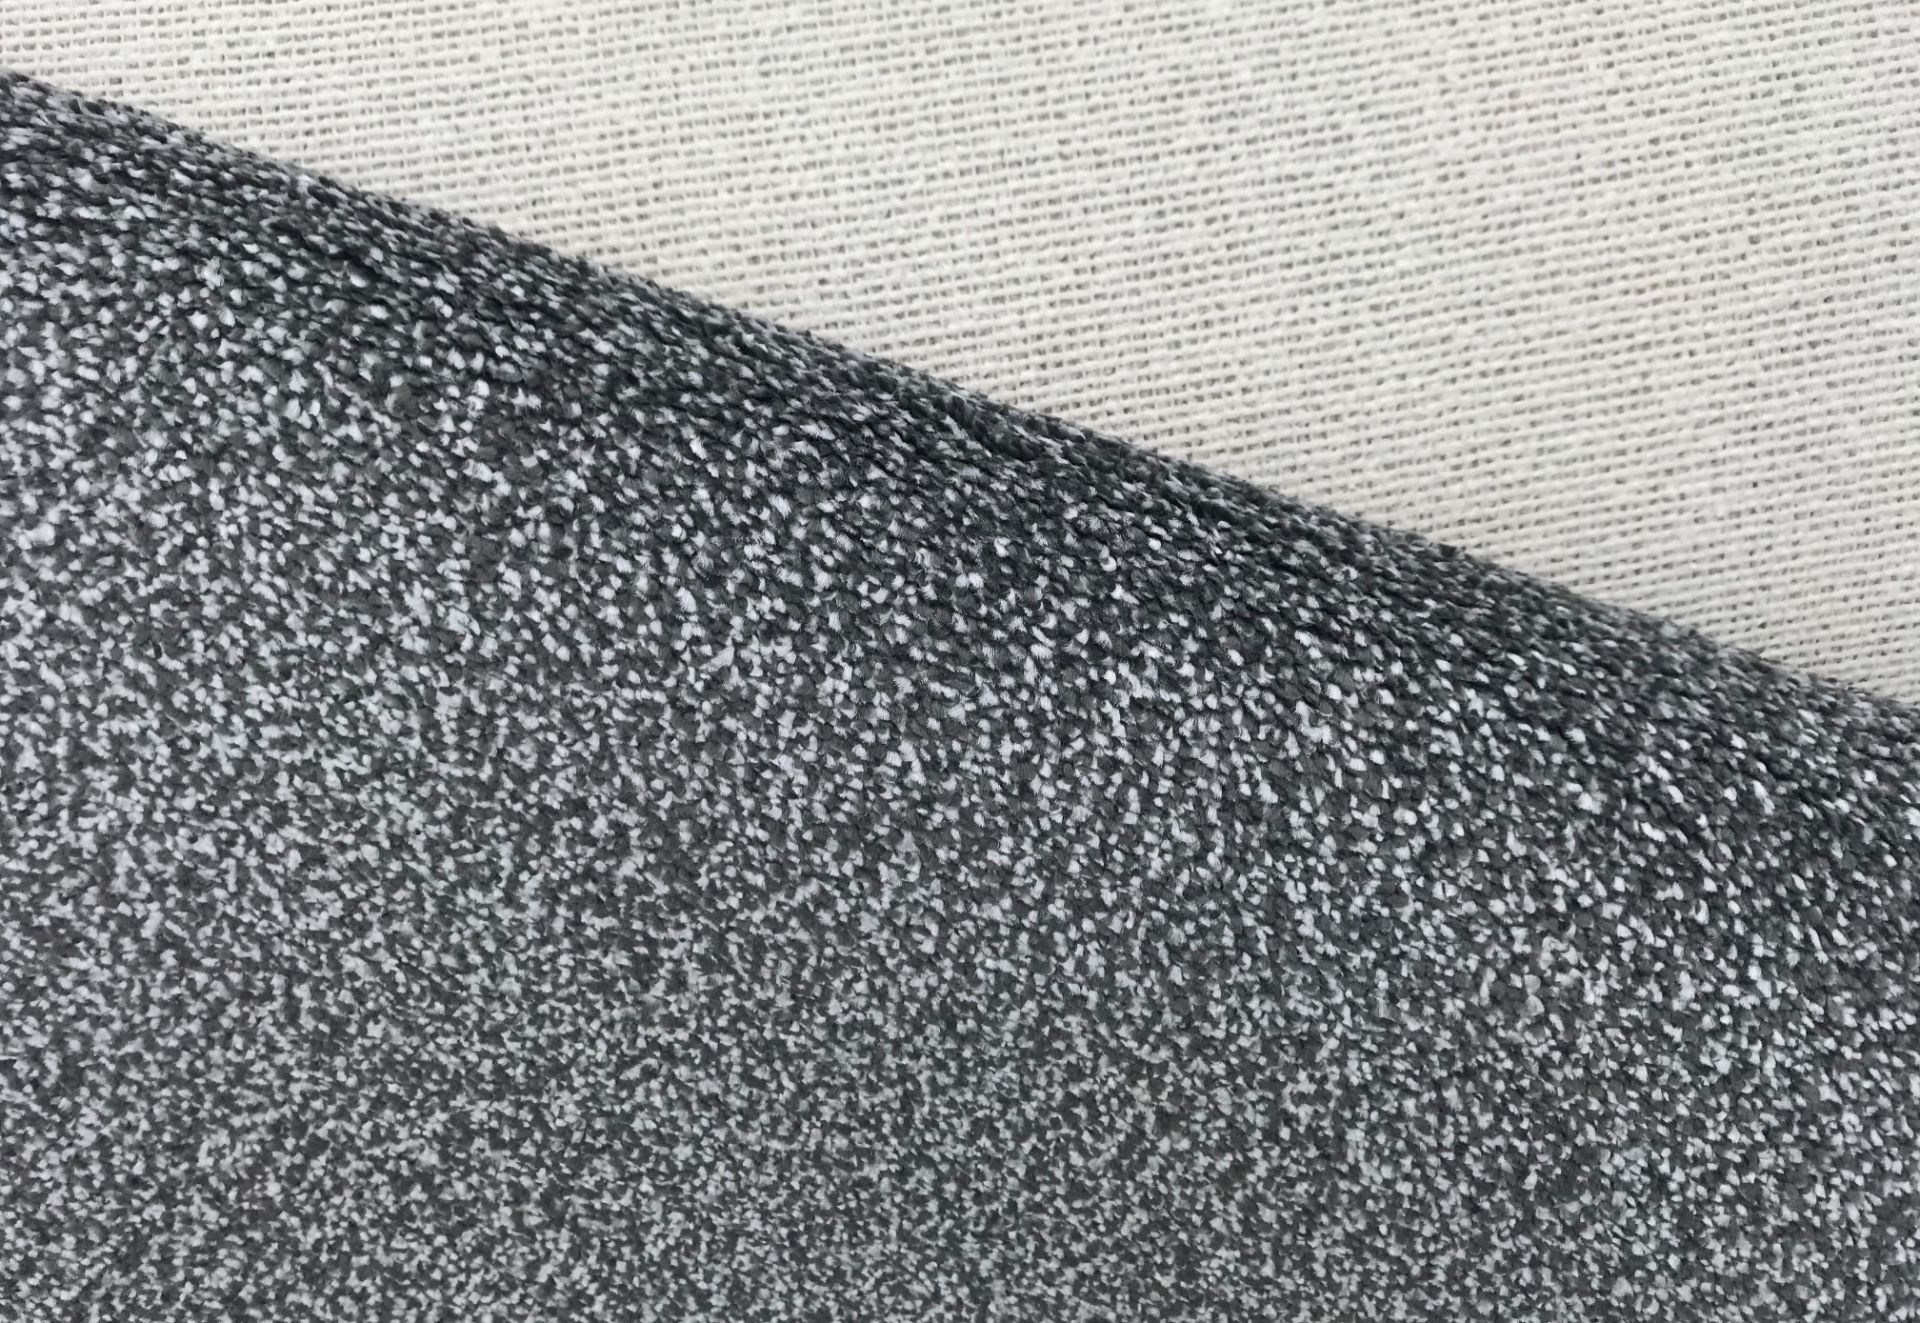 1 x Luxury 50Oz Twist Pile Carpet - Colour Platinum Grey - 18X4 Meter Roll - Rrp £36.99/Sqm - Ref: - Image 4 of 5